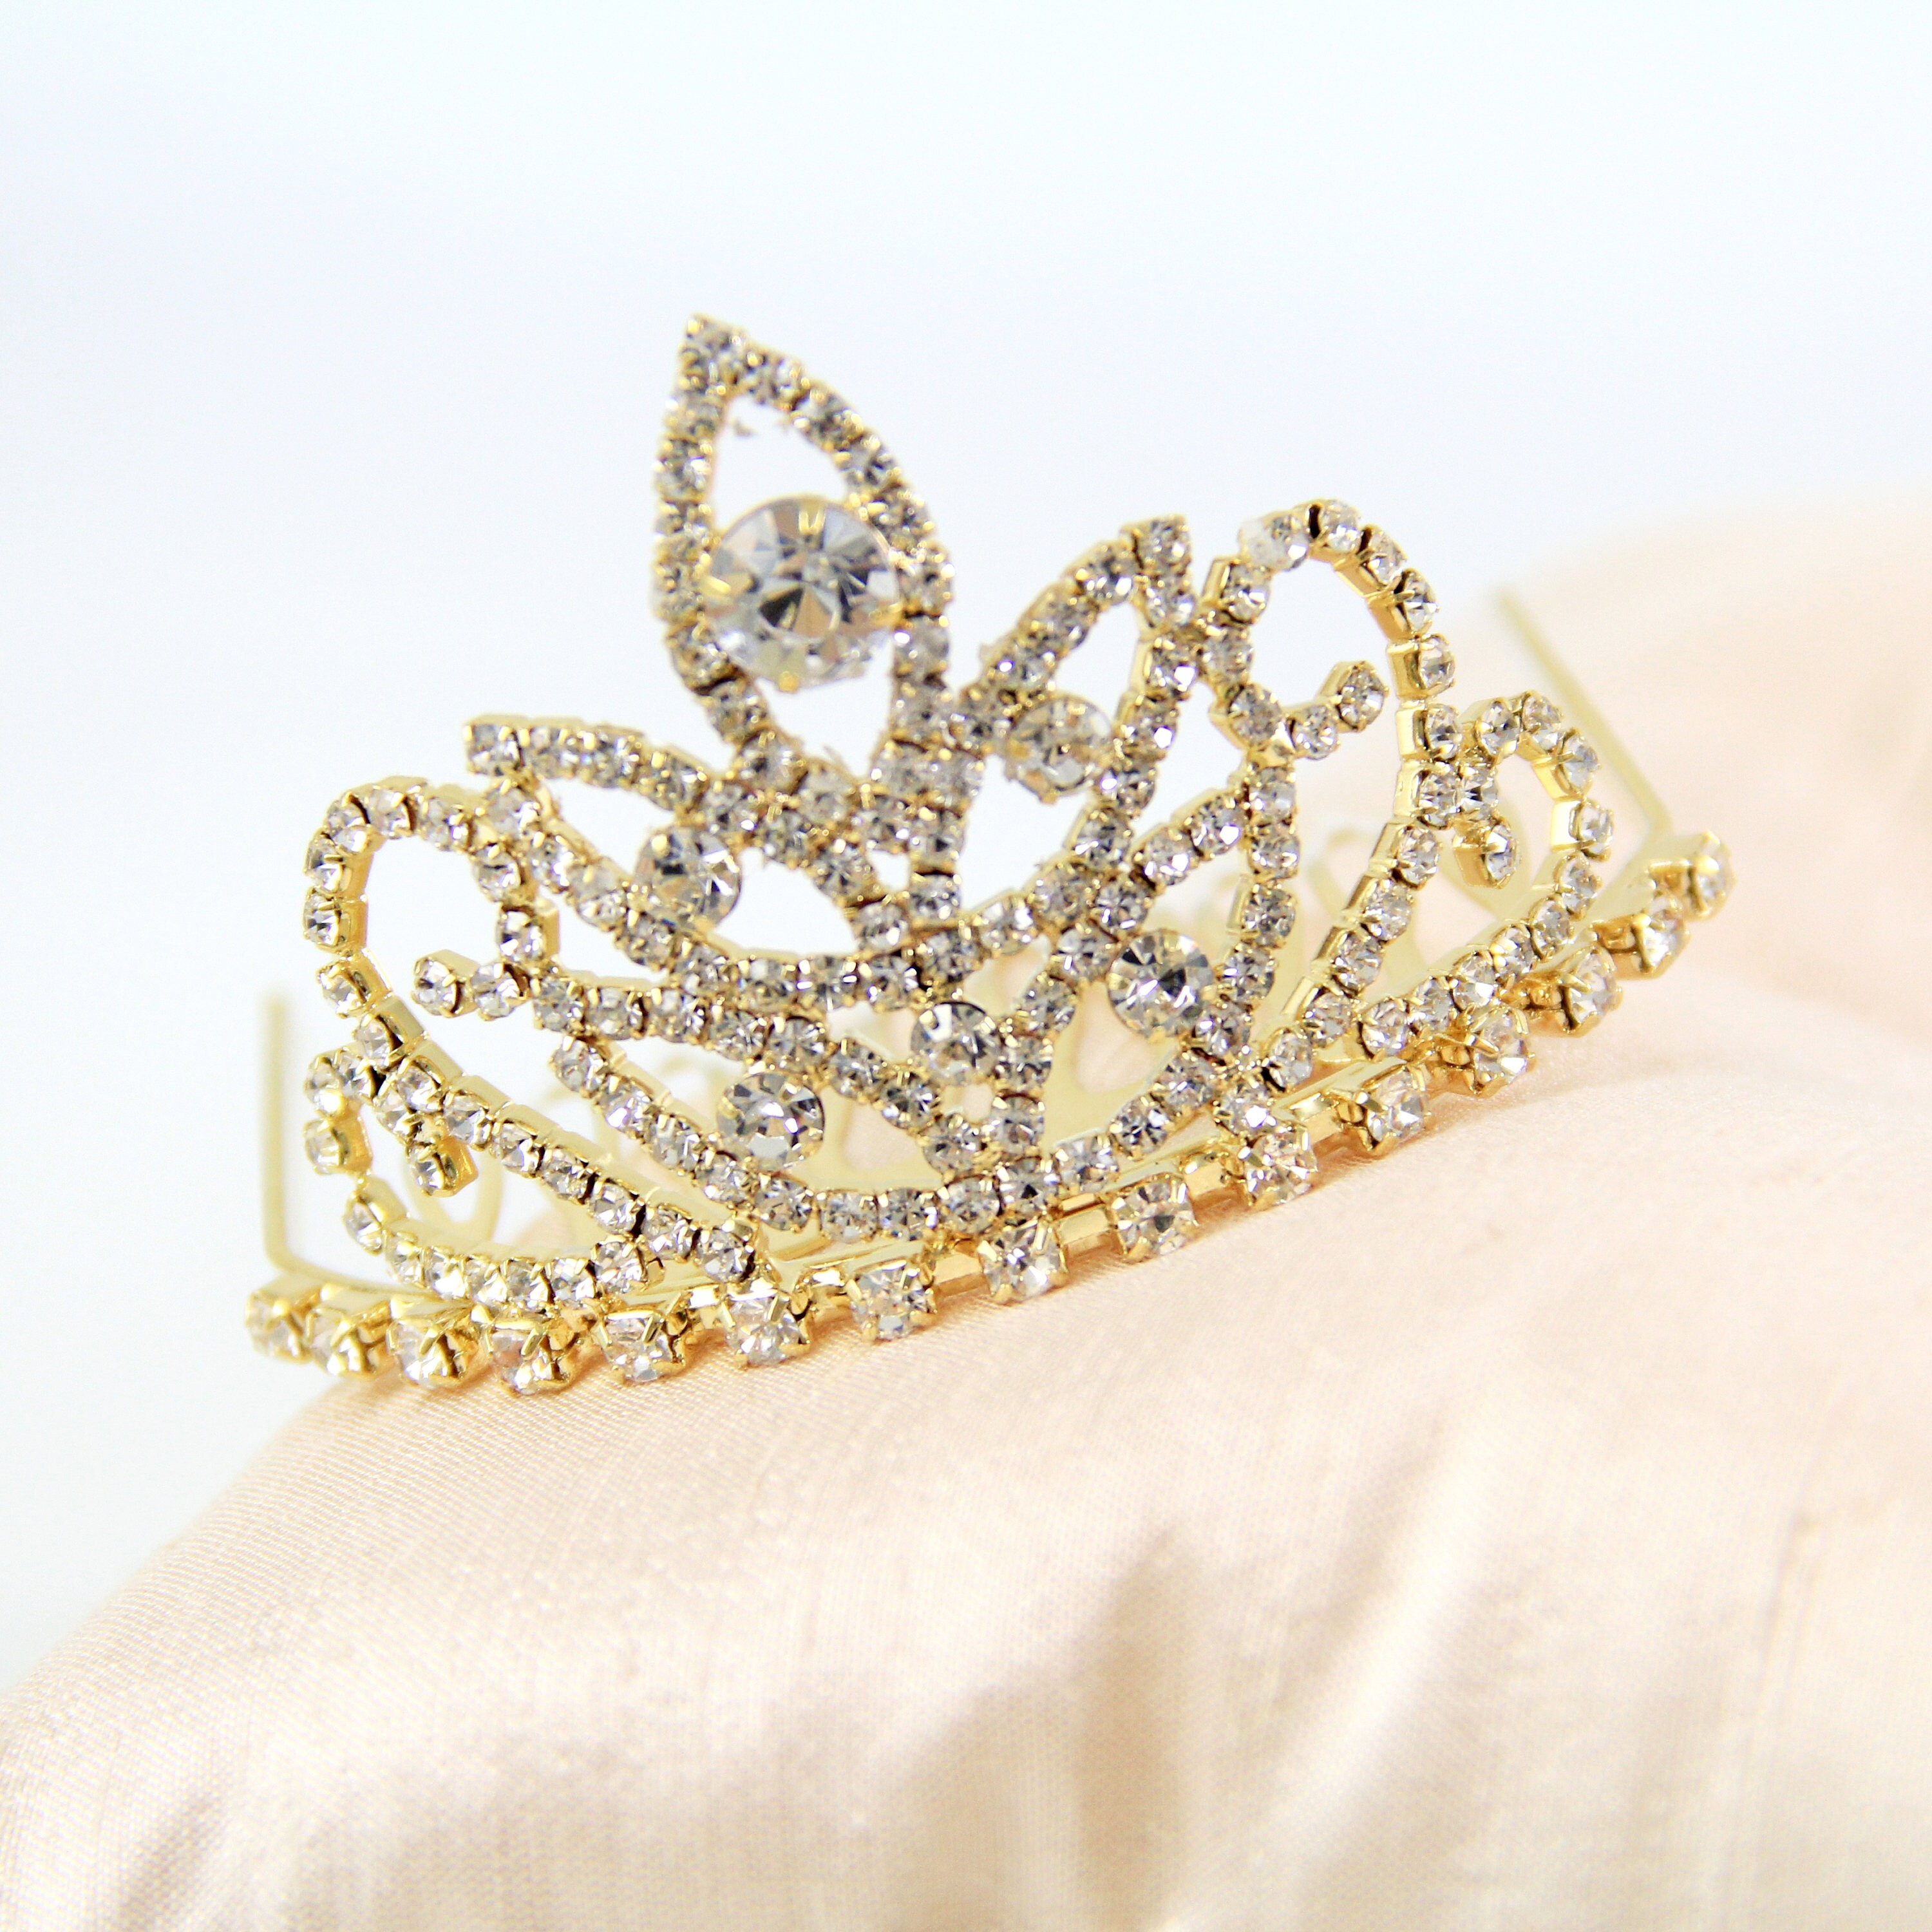 Rhinestone Princess Gold Crown Tiara Comb for Bridal Wedding